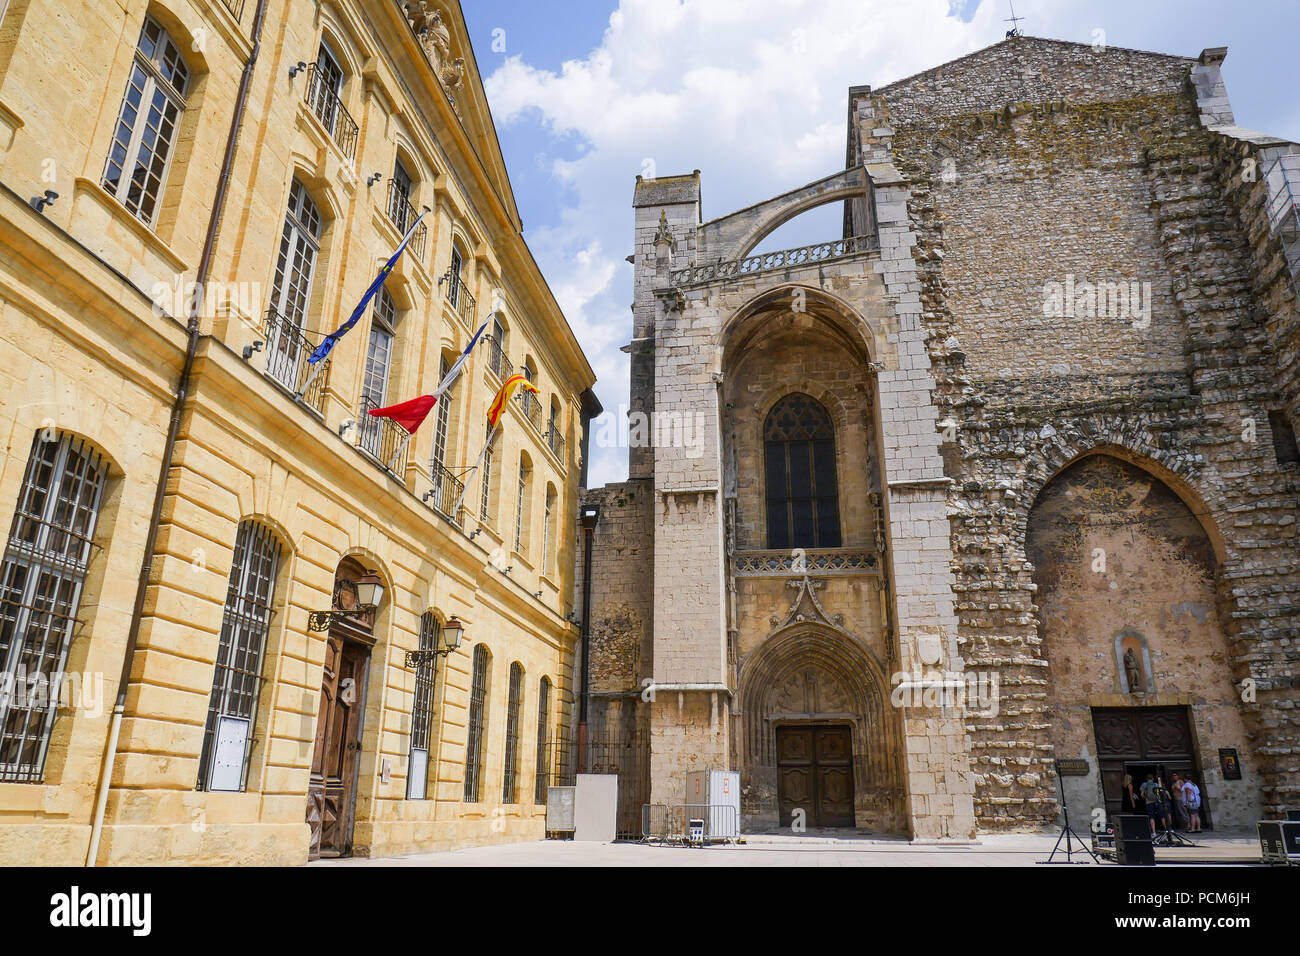 Townhall and basilica facades, Saint-Maximin la Sainte-Baume, Var, France Stock Photo